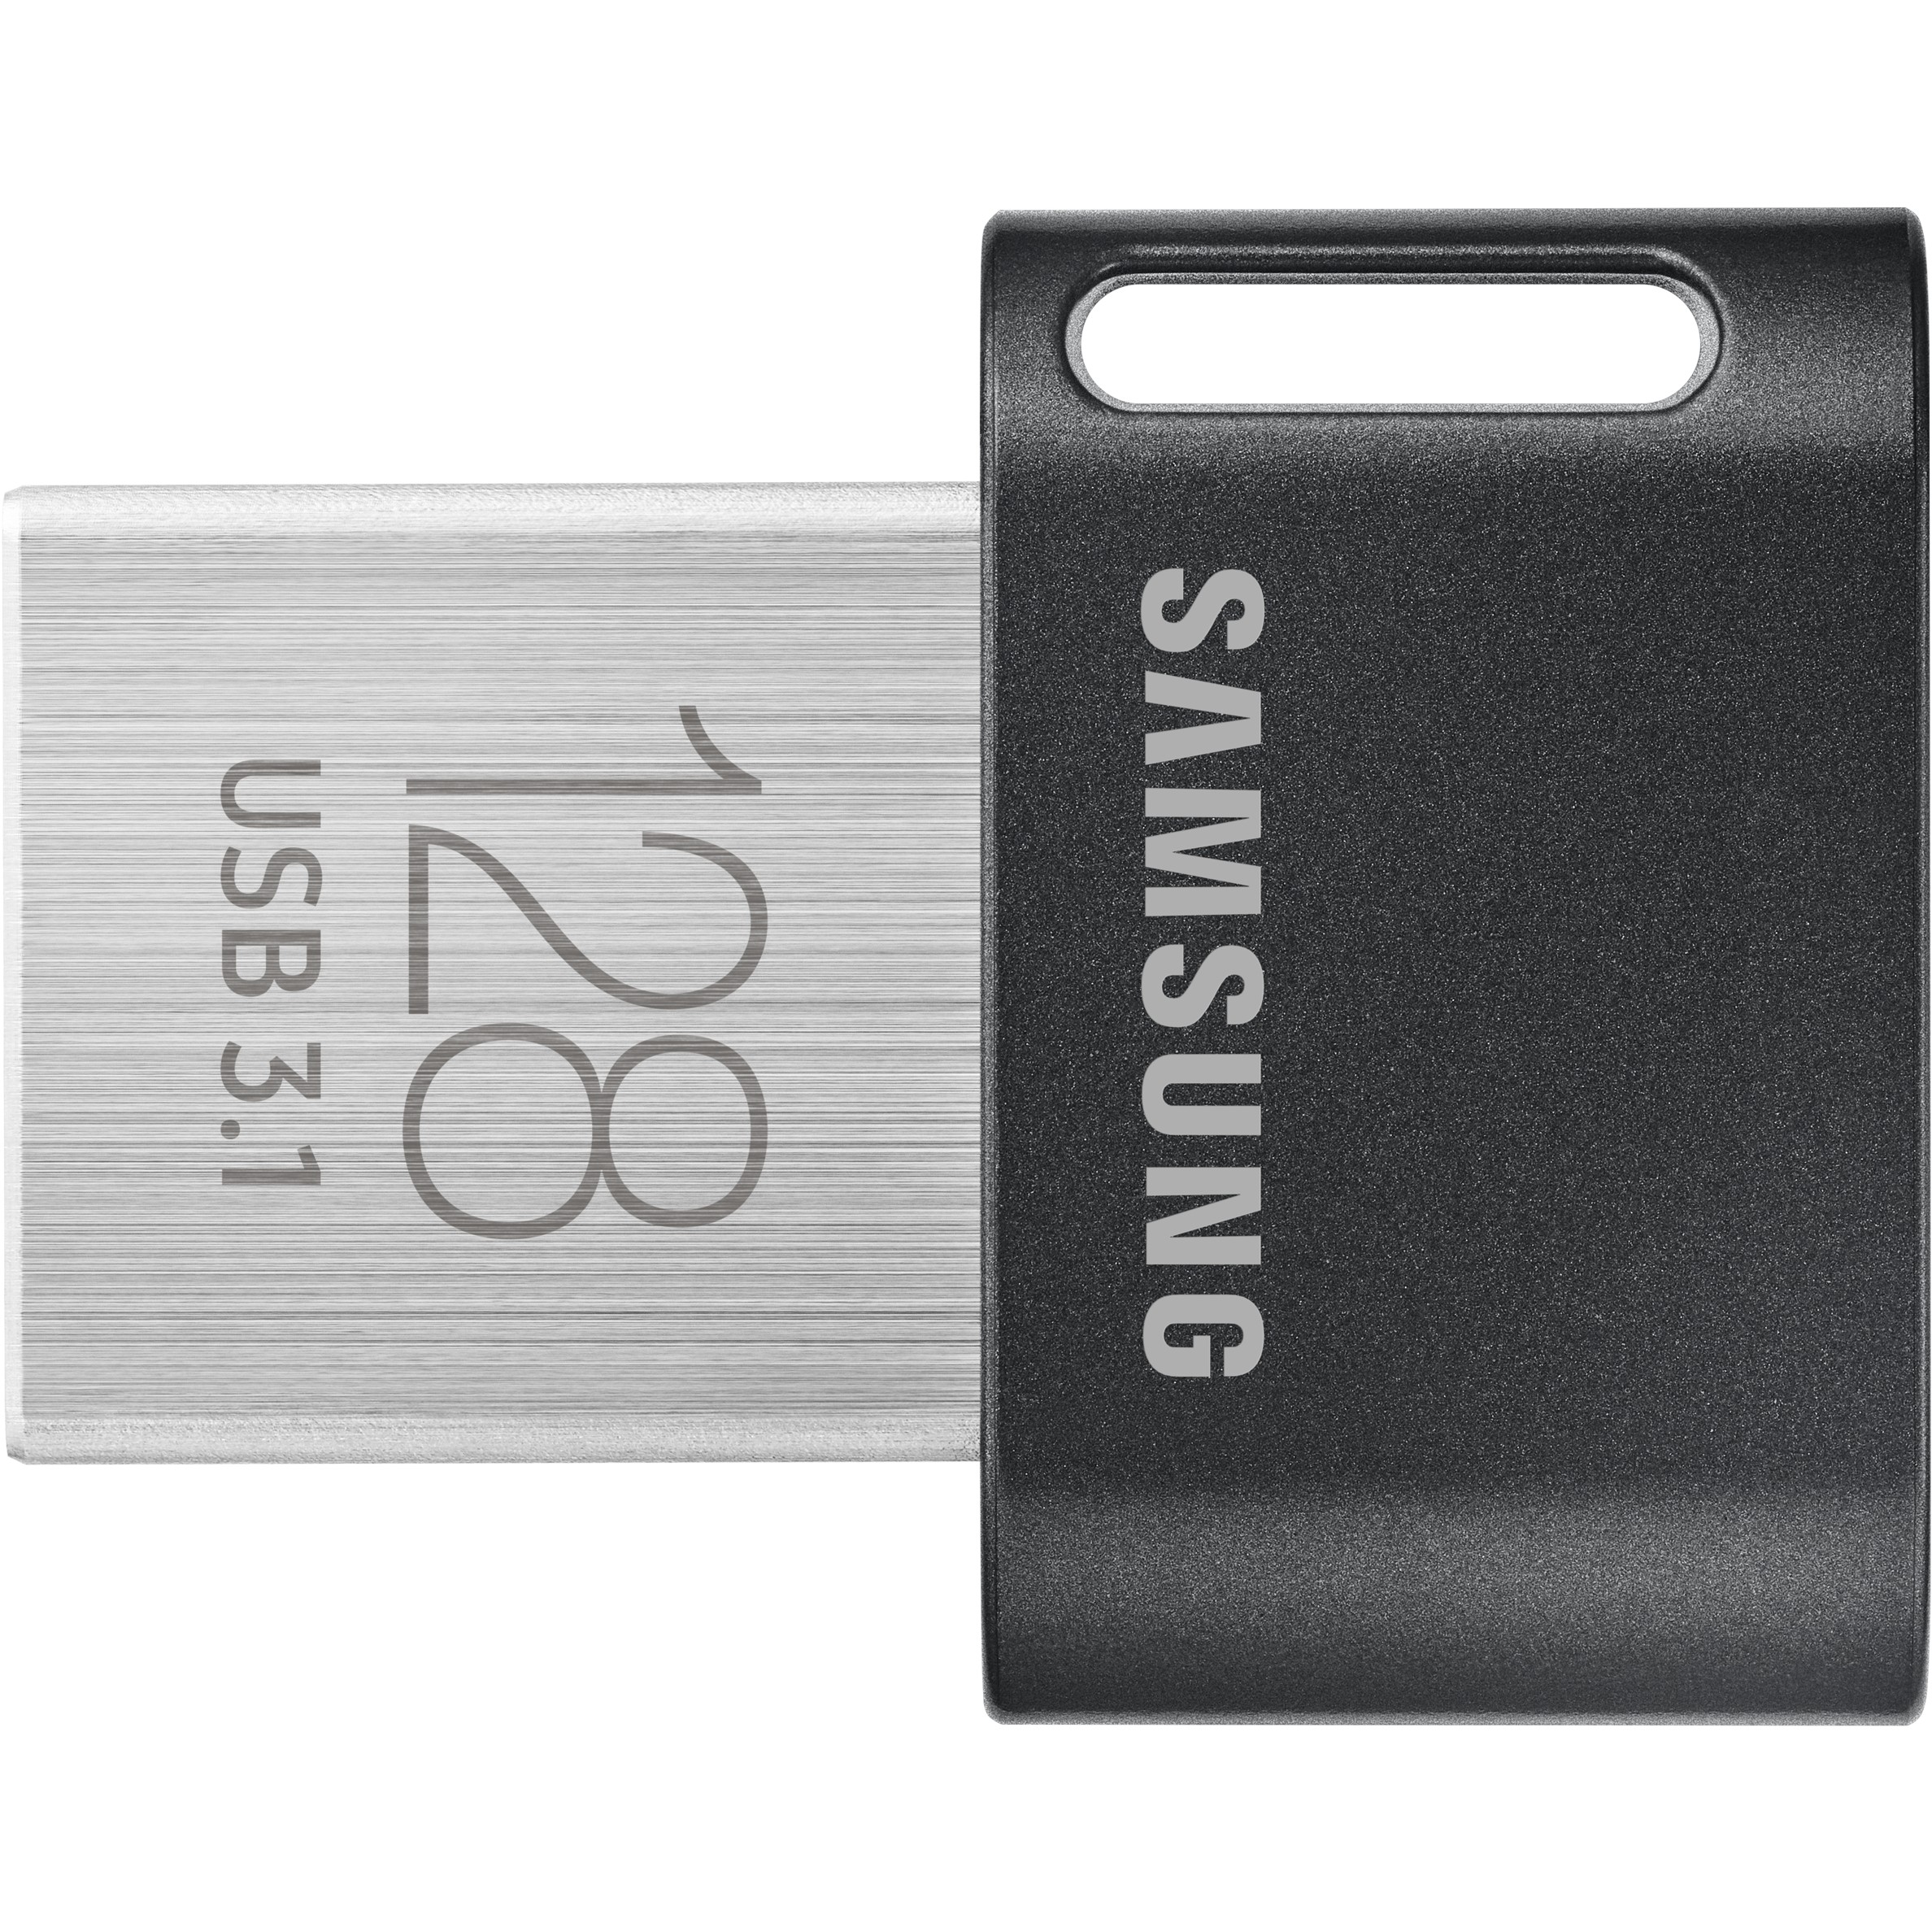 Samsung MUF-128AB USB flash drive - MUF-128AB/APC